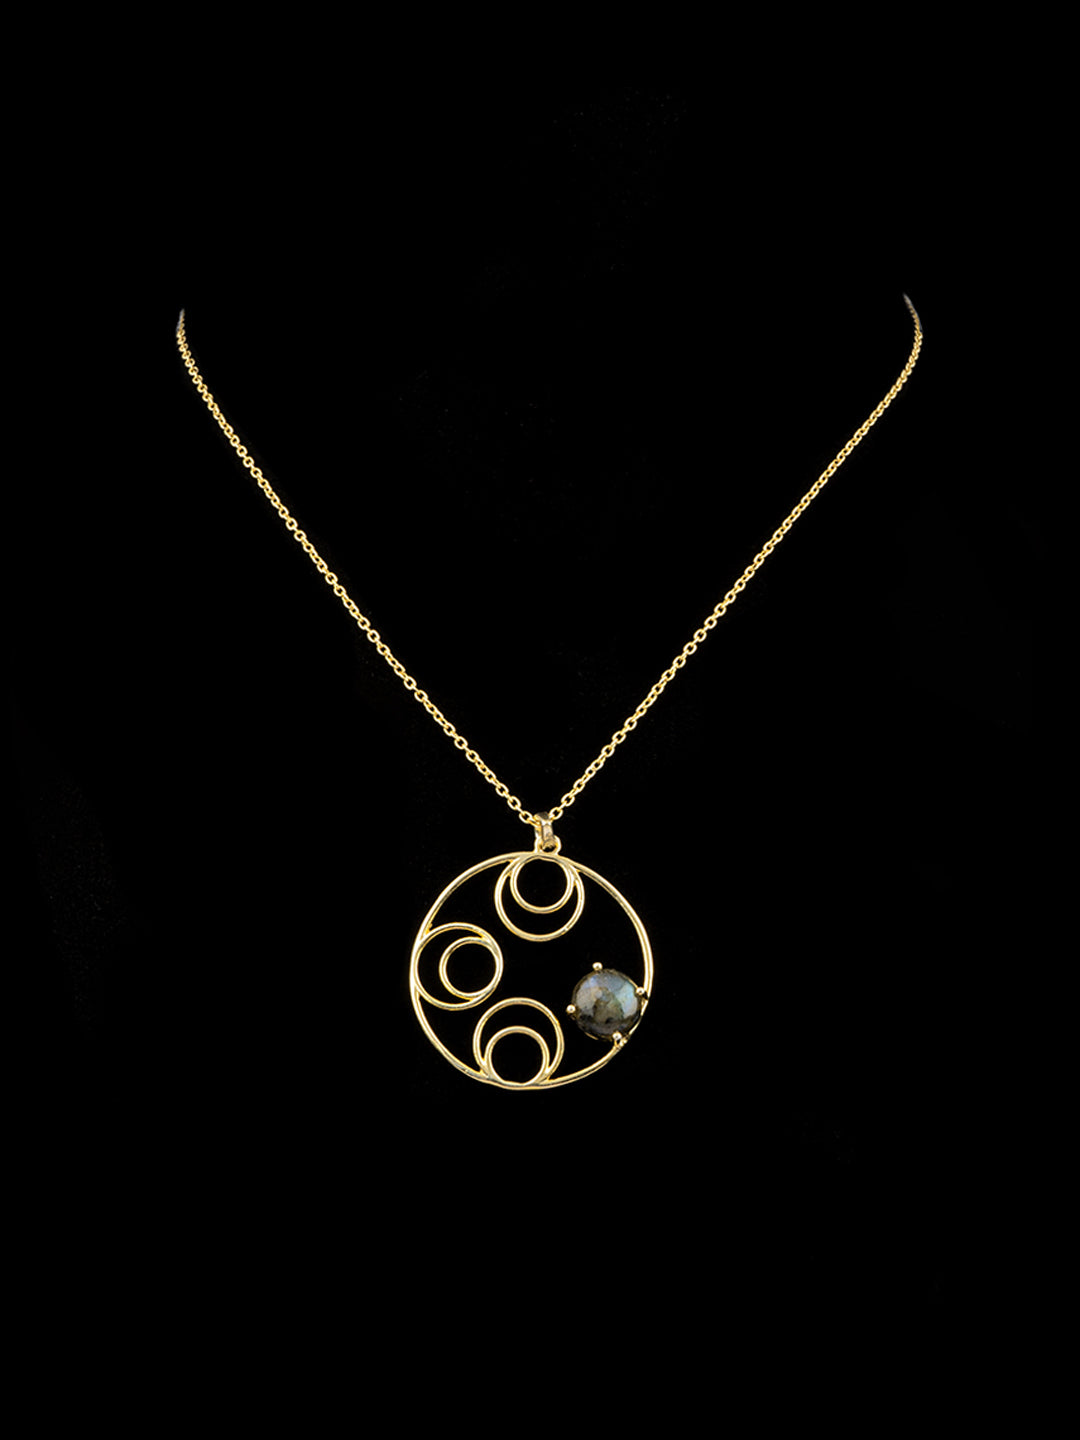 Gold Plated Circular Necklace with Labradorite Gemstone